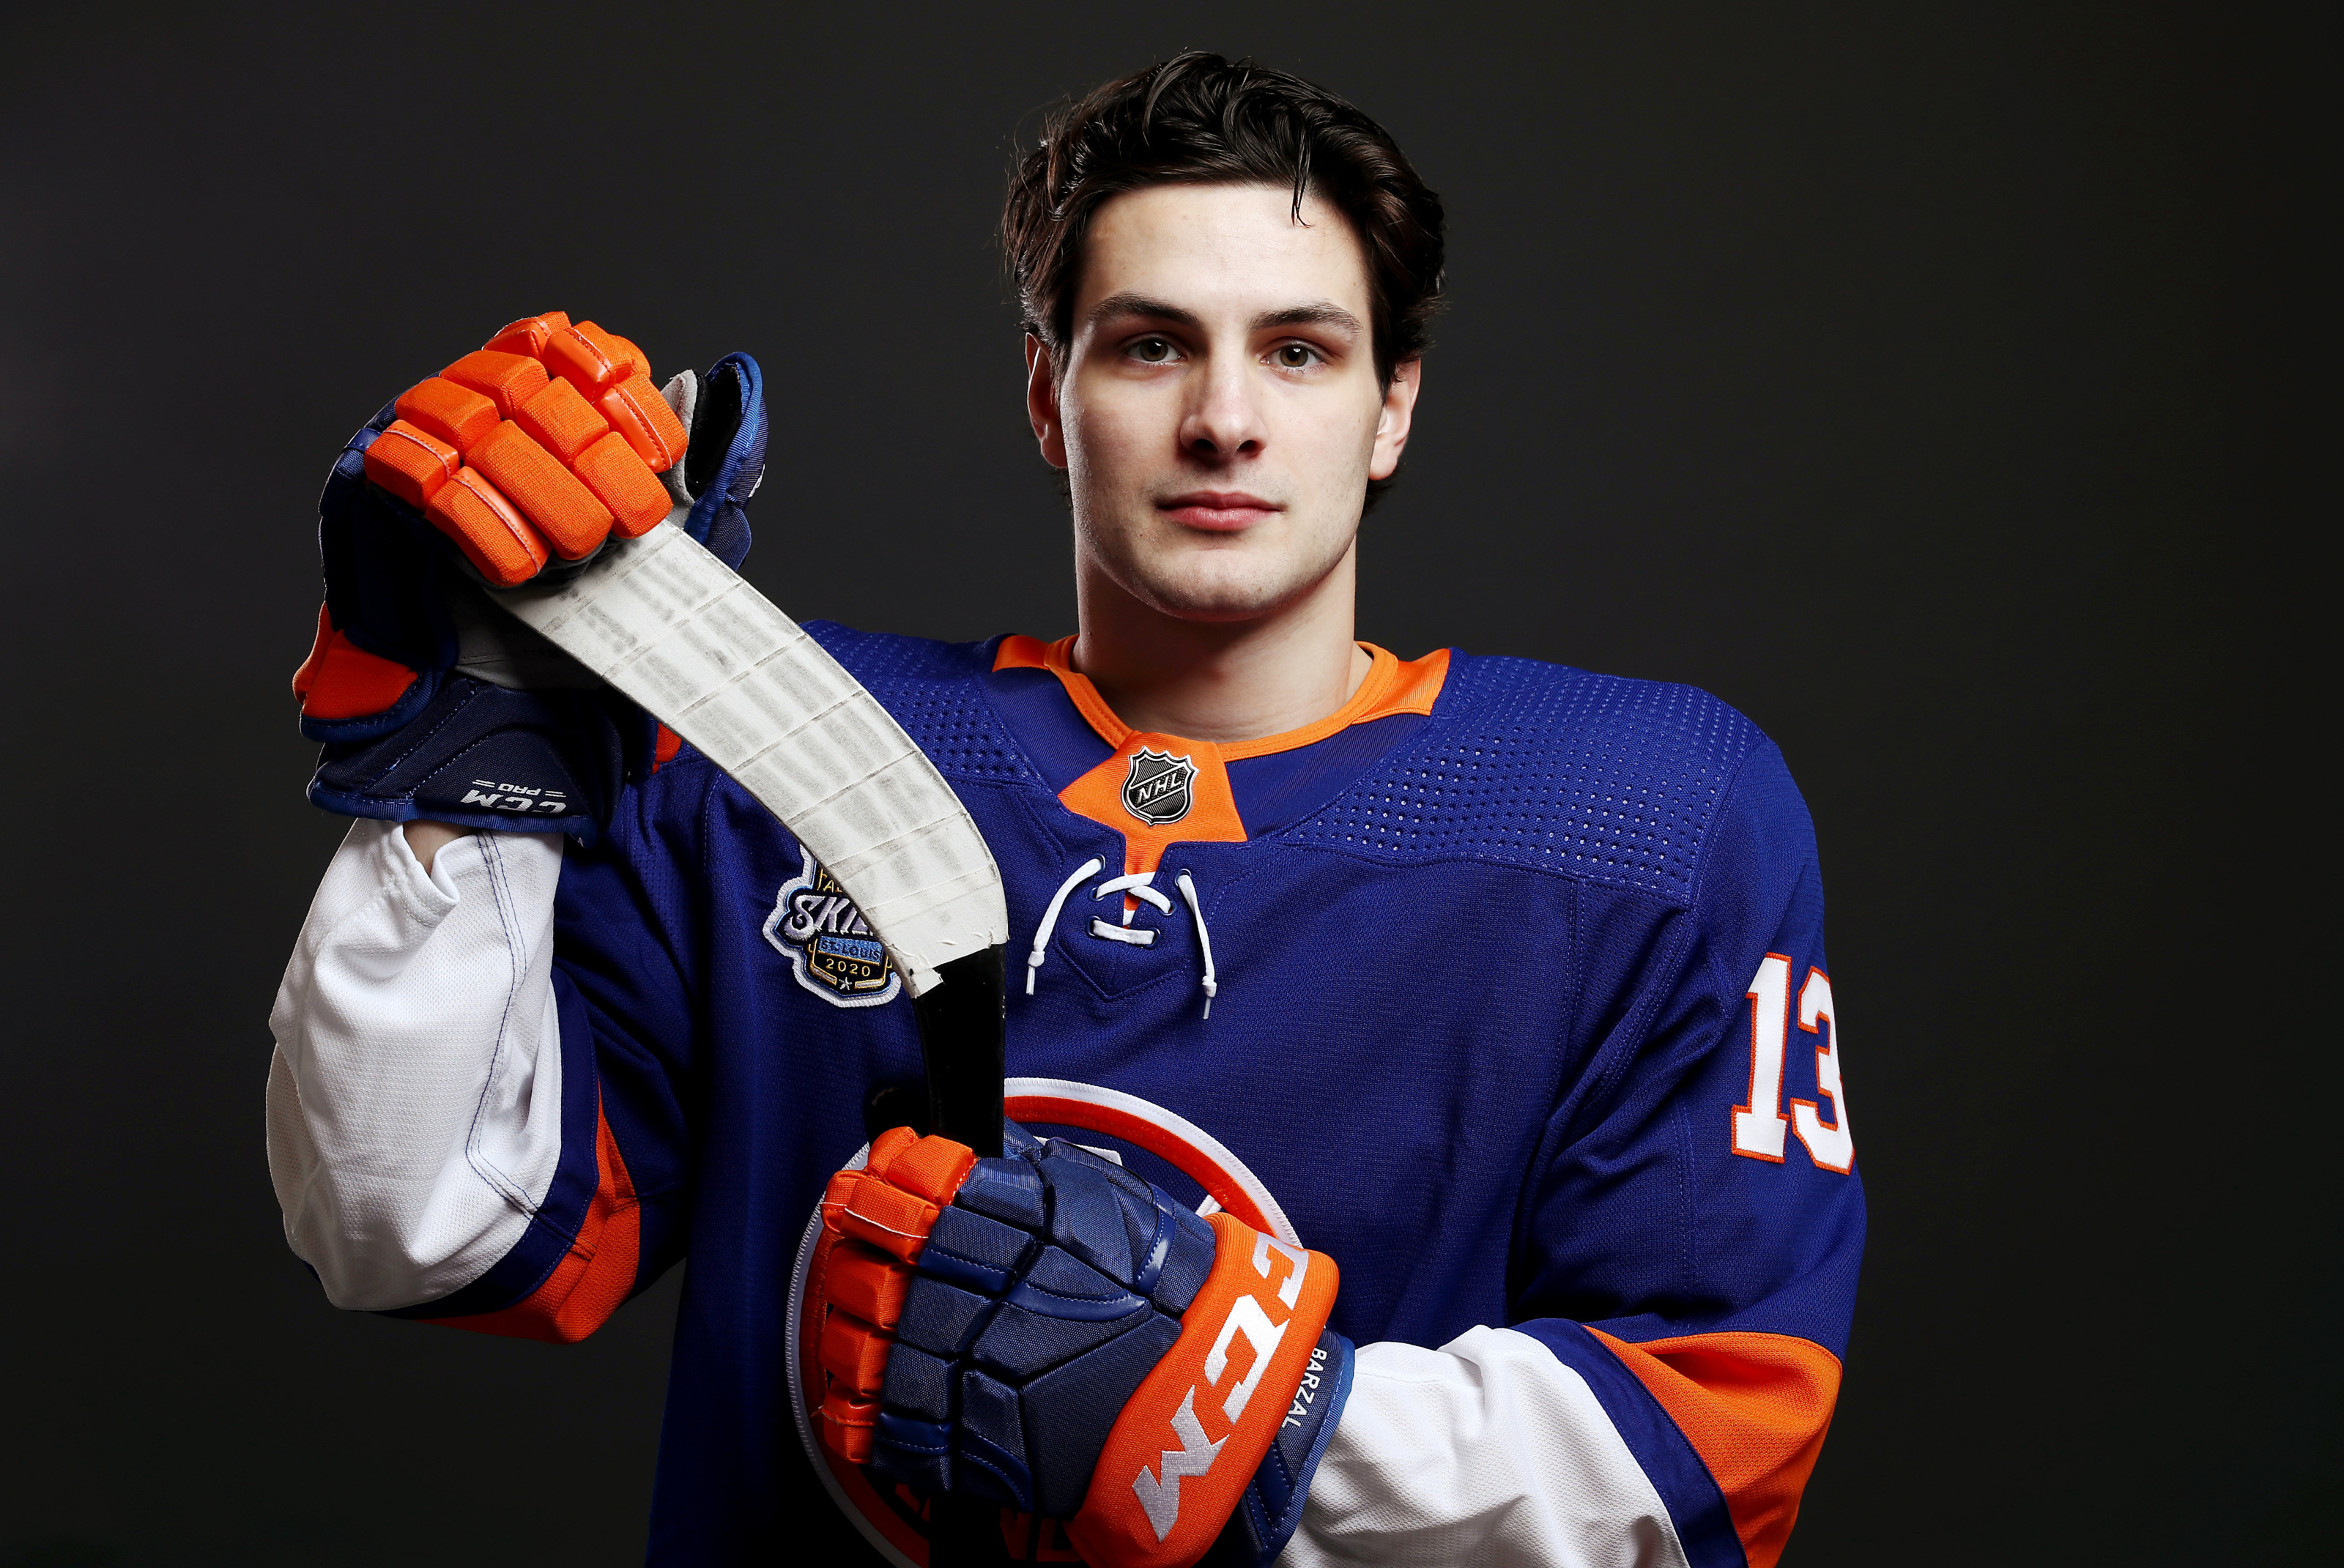 Matt Barzal New York Islanders Jersey